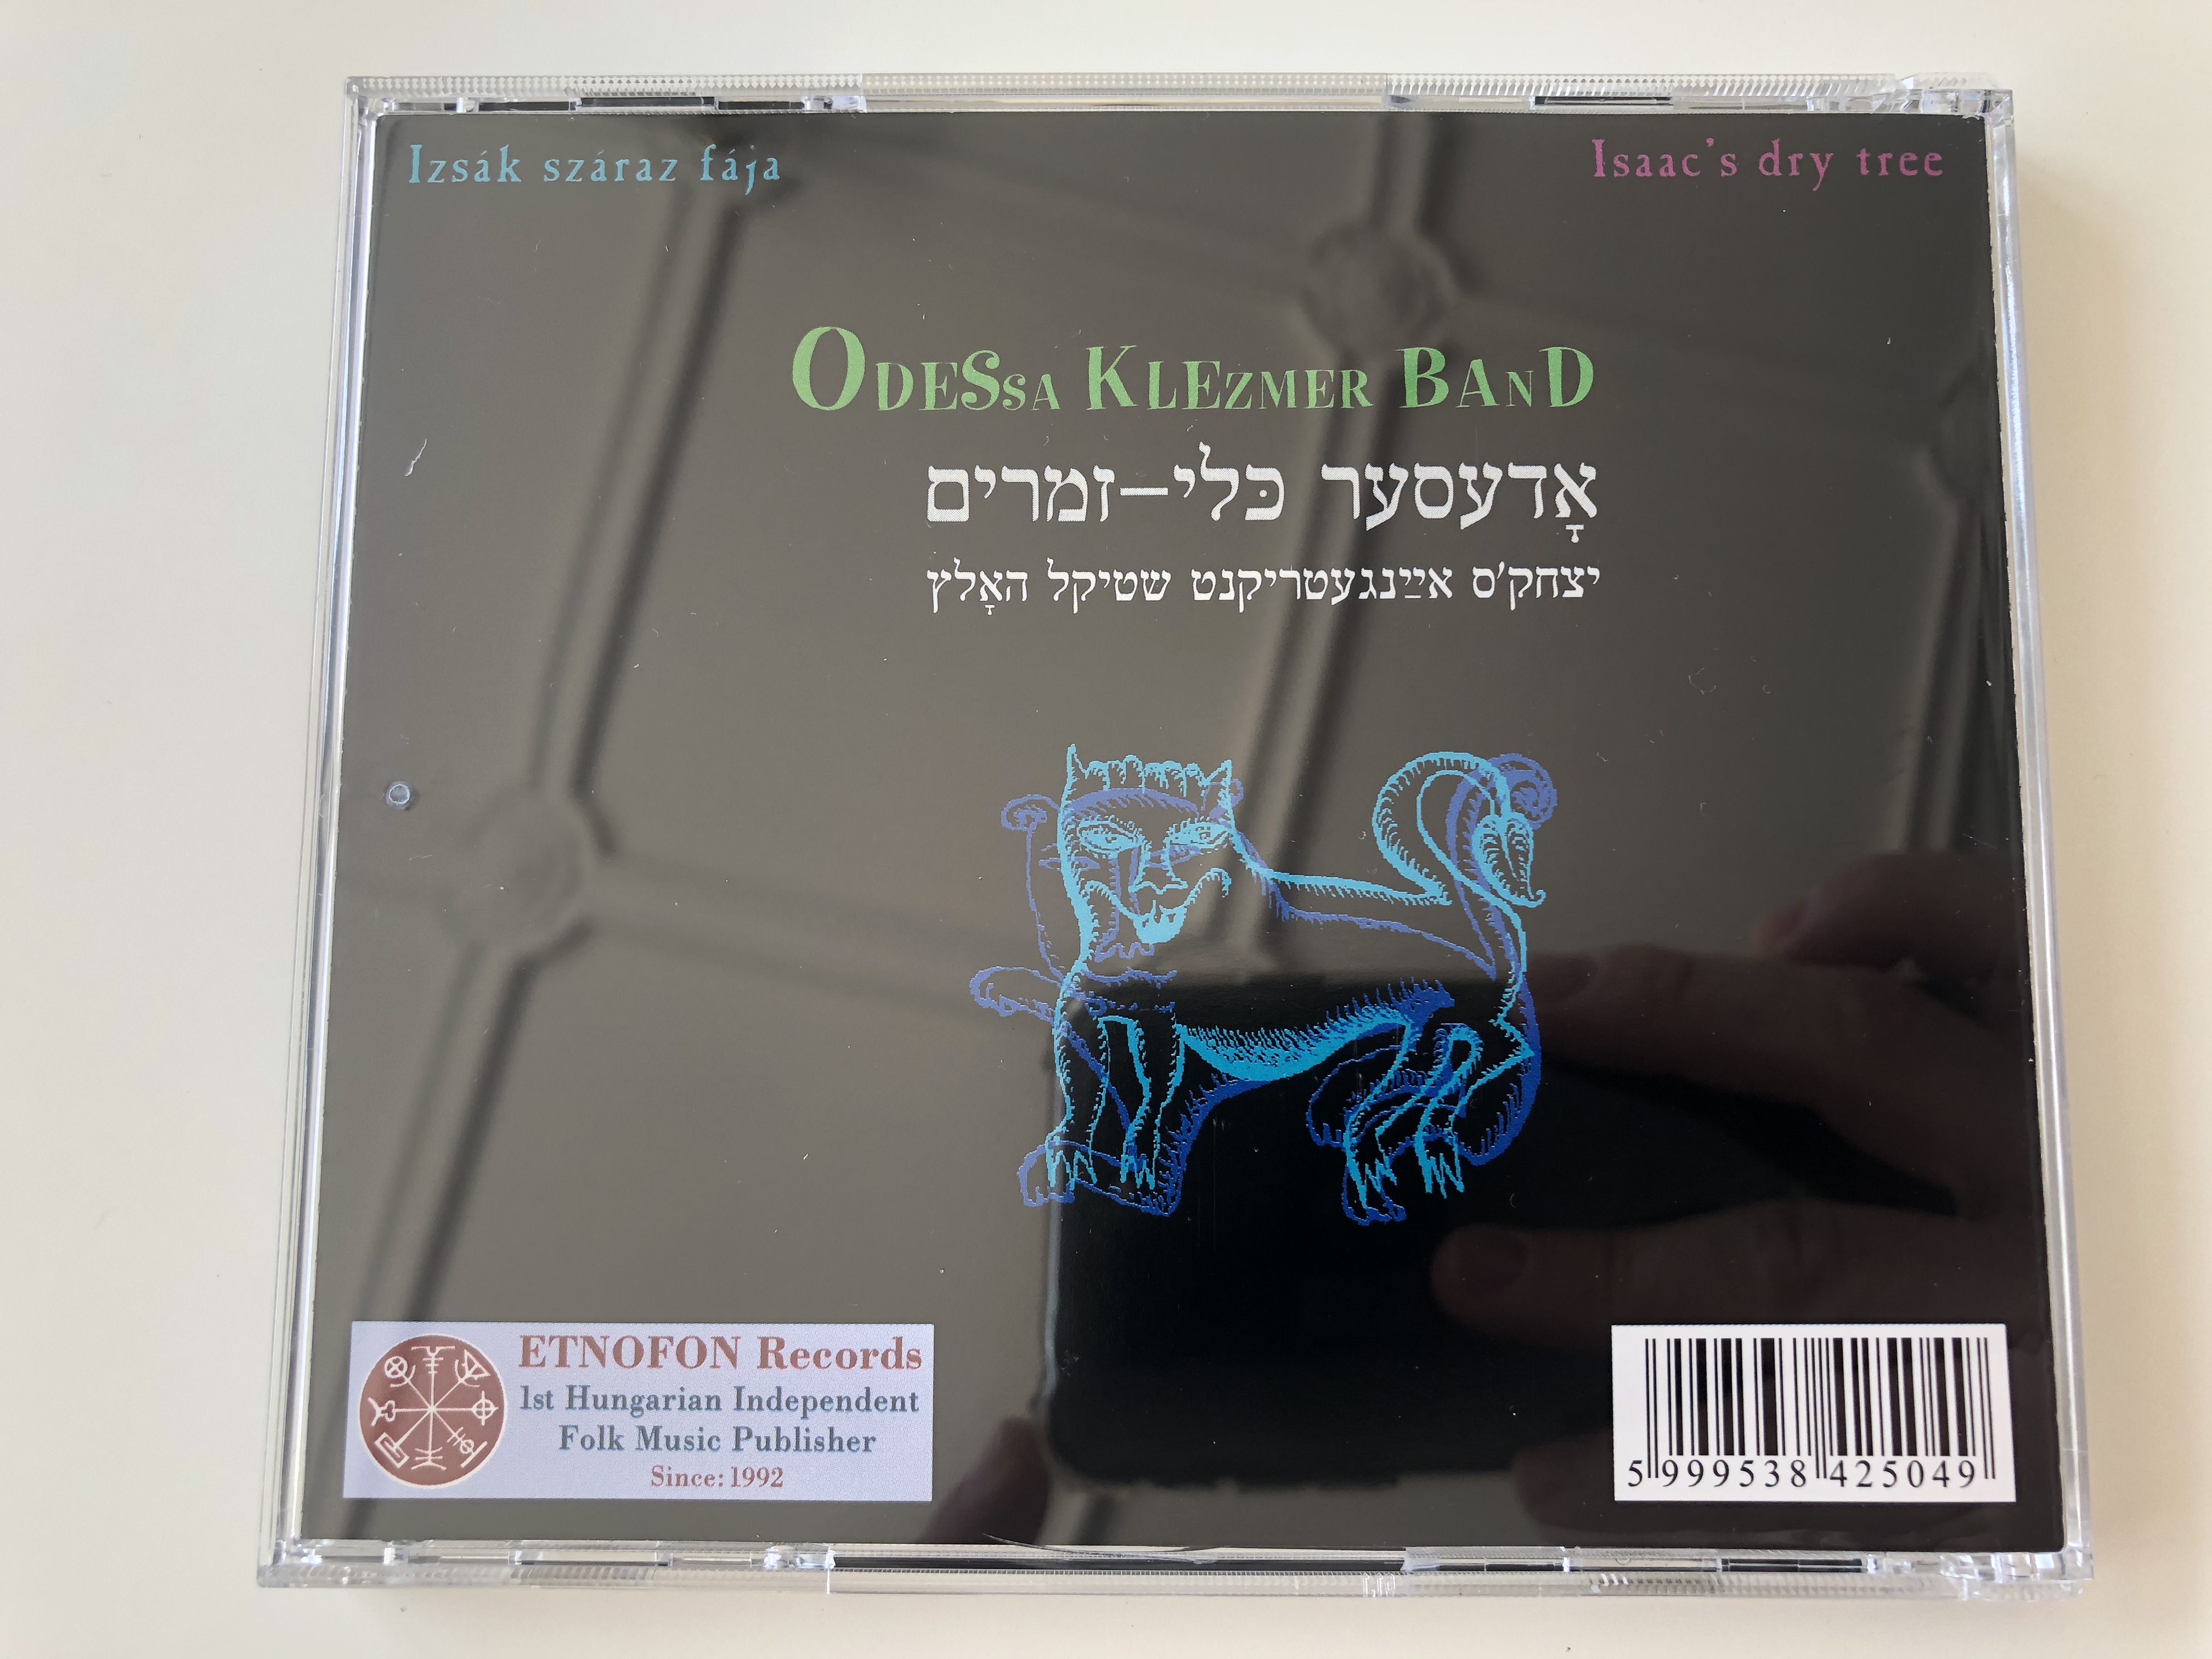 odesa-klezmer-band-izsak-szaraz-faja-isaac-s-dry-tree-etnofon-records-audio-cd-2000-er-cd-022-7-.jpg